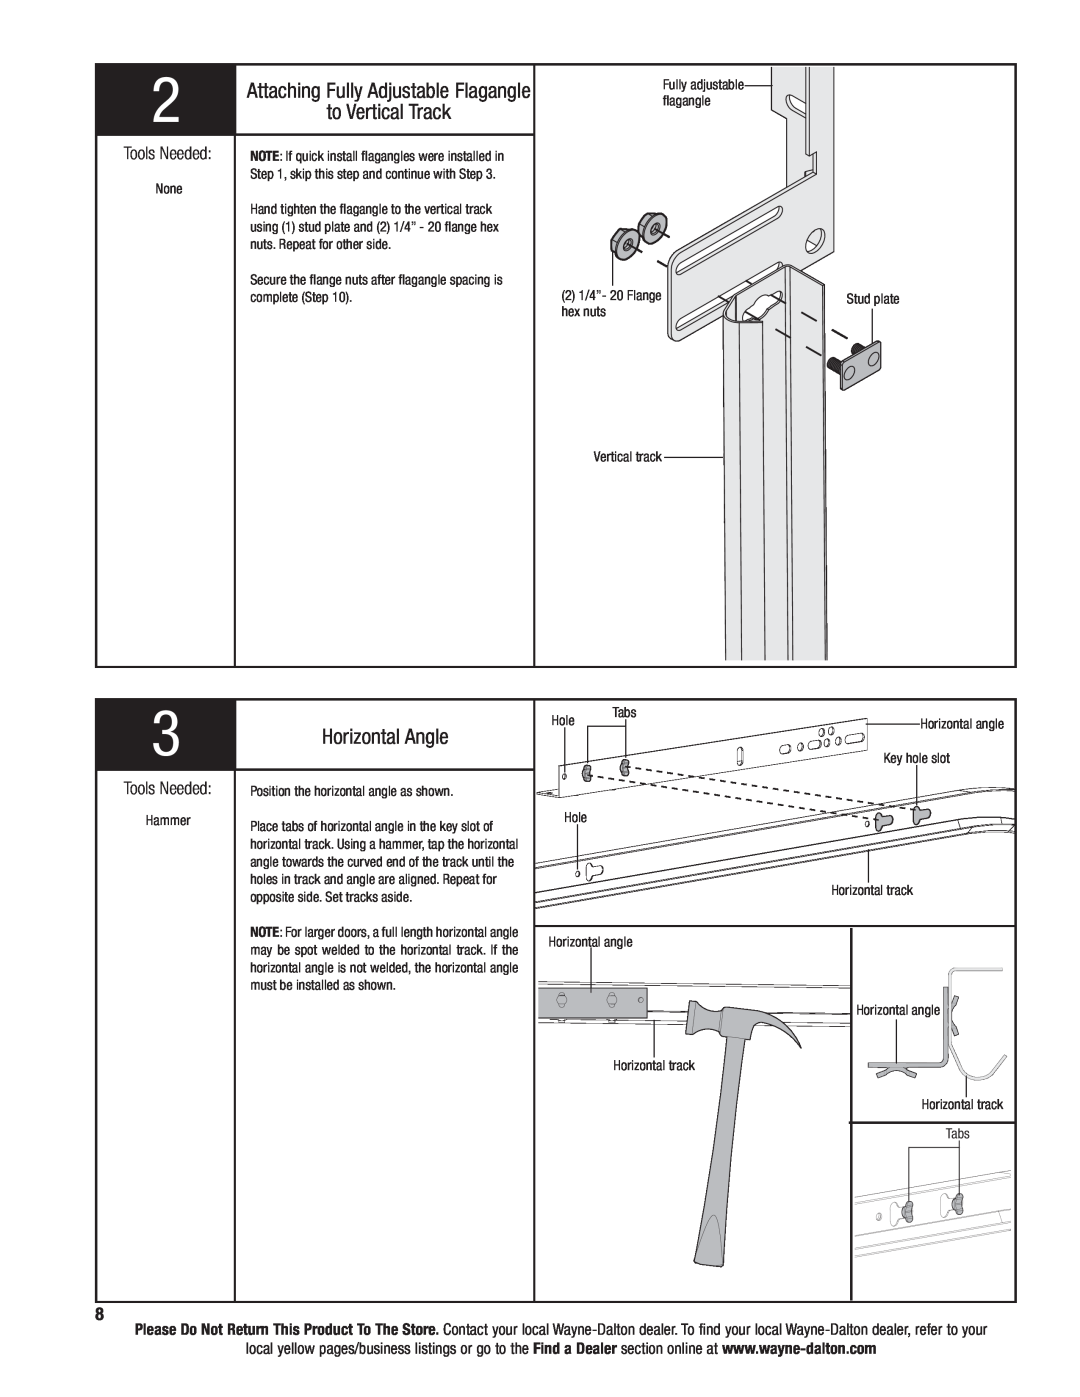 Wayne-Dalton 9300 installation instructions to Vertical Track, Horizontal Angle, 2Attaching Fully Adjustable Flagangle 